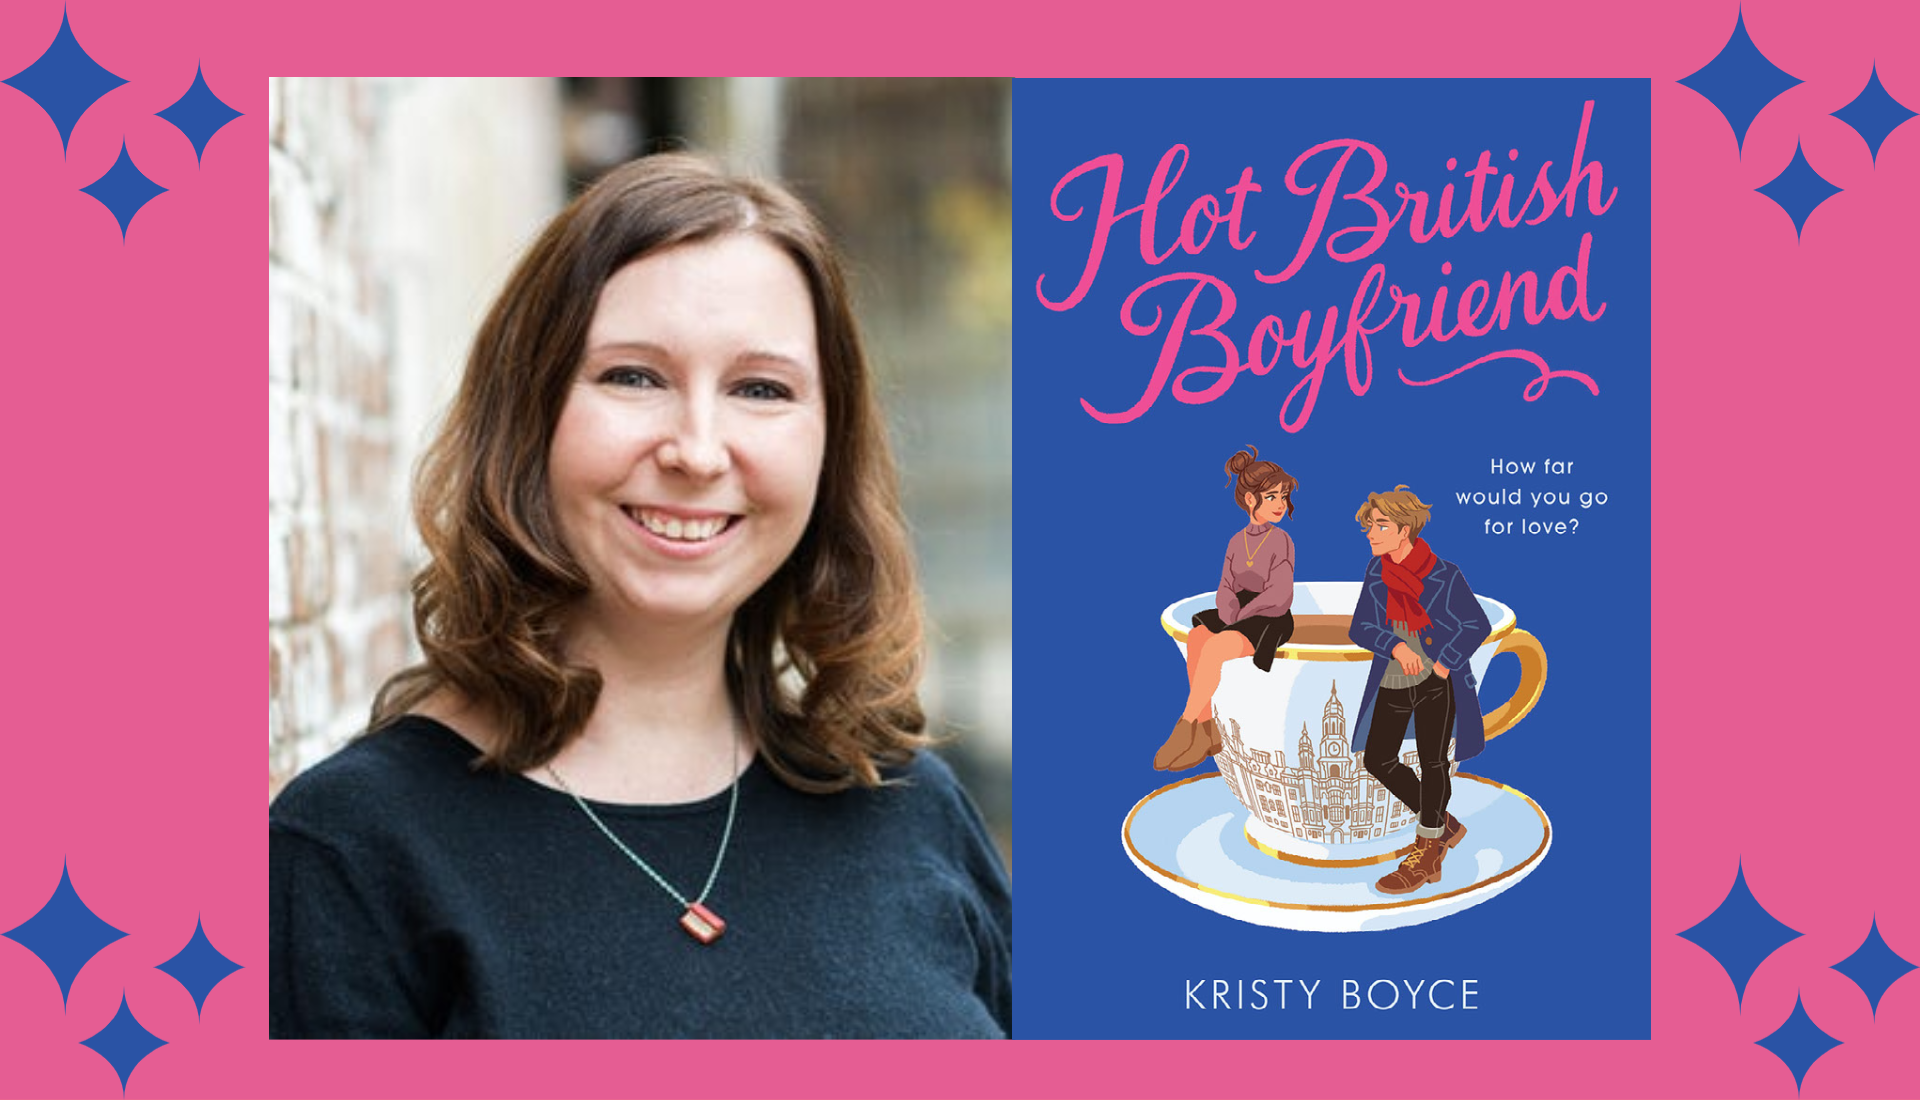 Kristy Boyce, author or Hot British Boyfriend